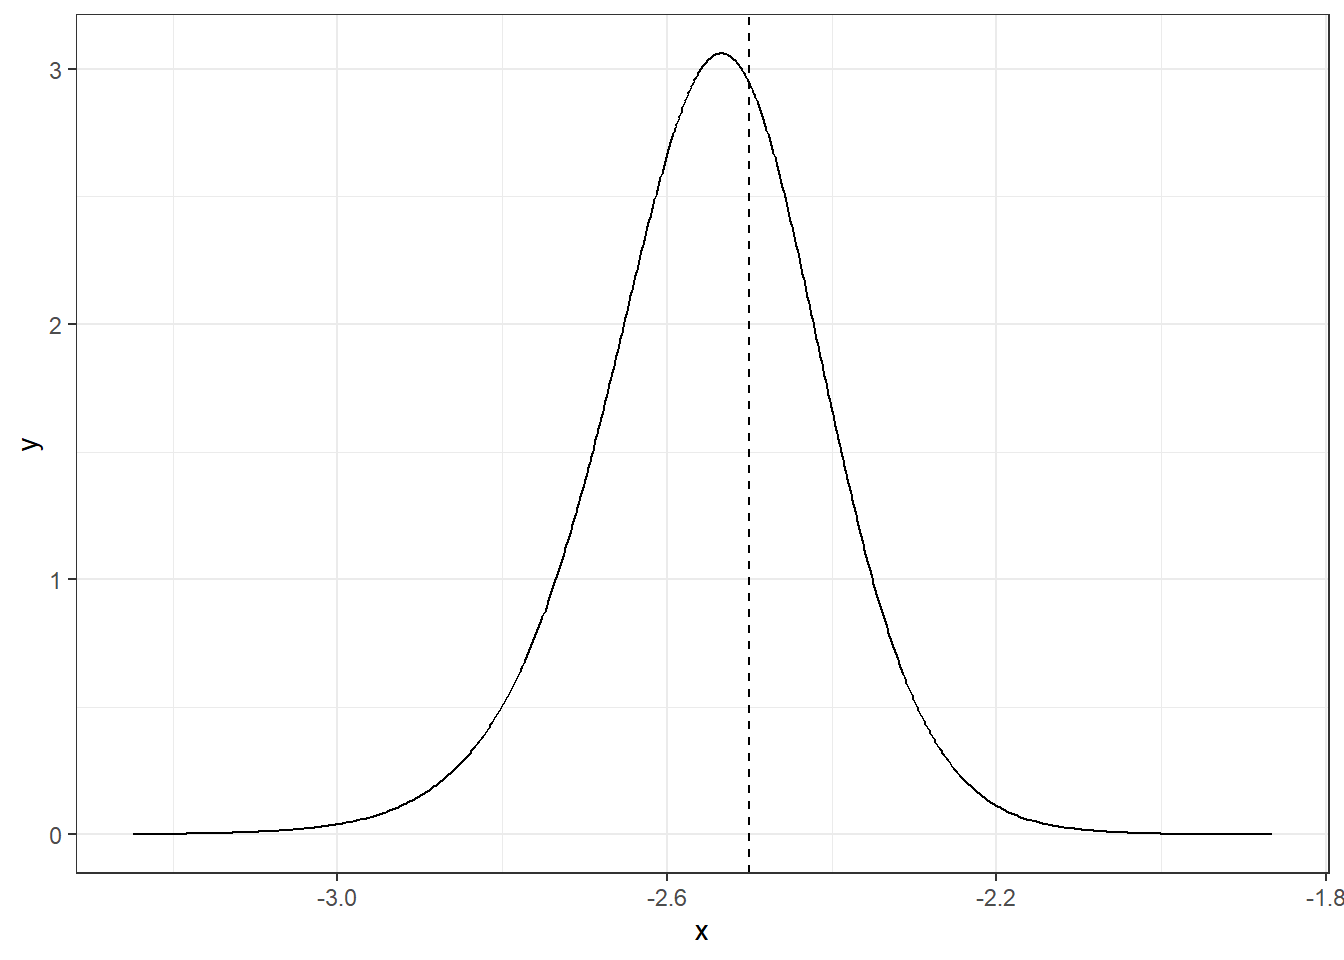 Posterior distribution of parameter $\alpha$ at value -2.5.